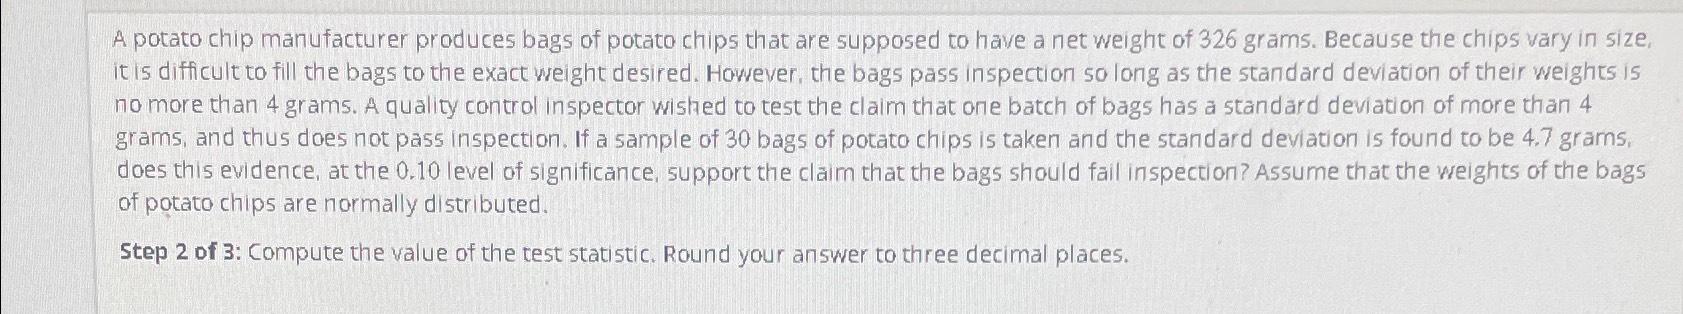 Potato chip maker produces special bag honoring veterans